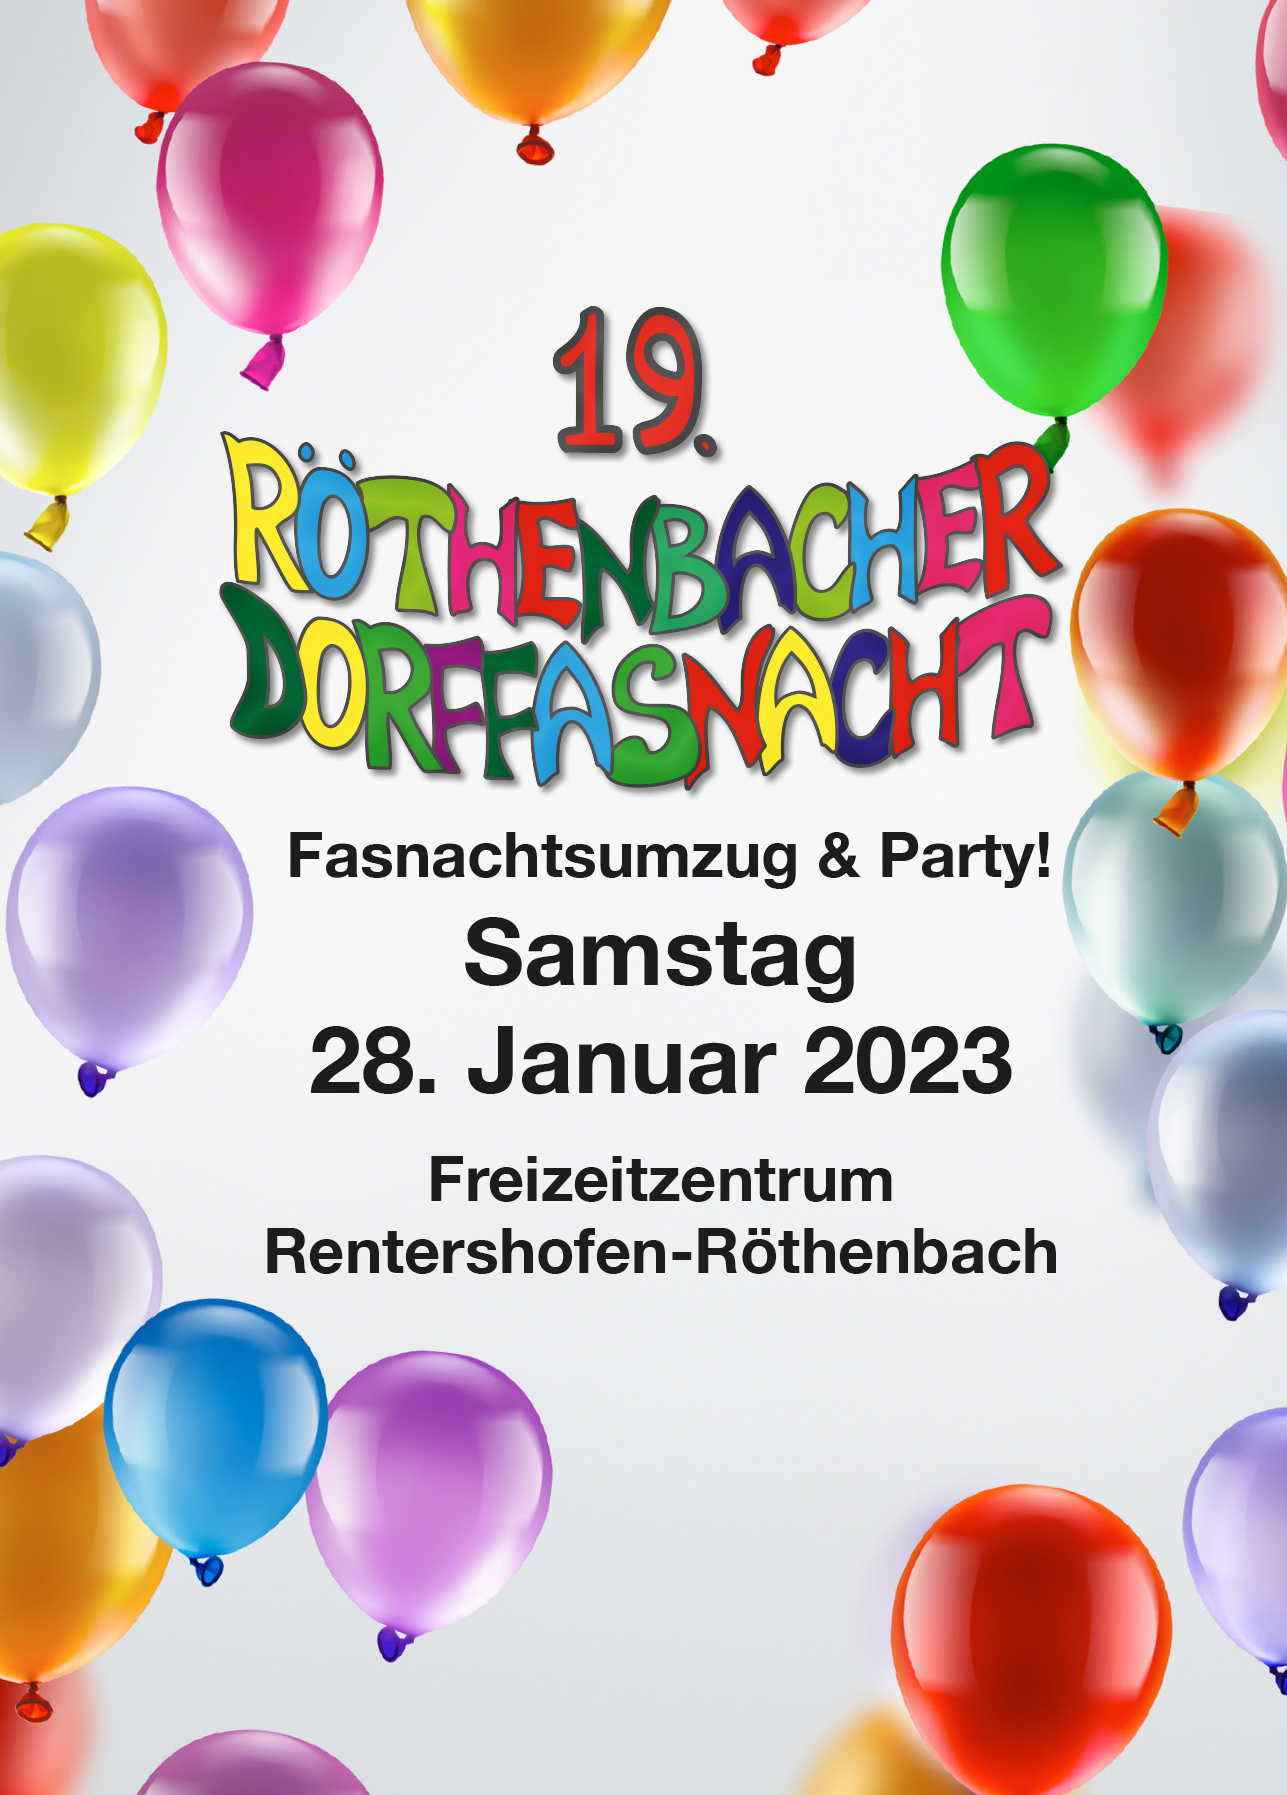 19. Röthenbacher Dorffasnacht 28.01.2023